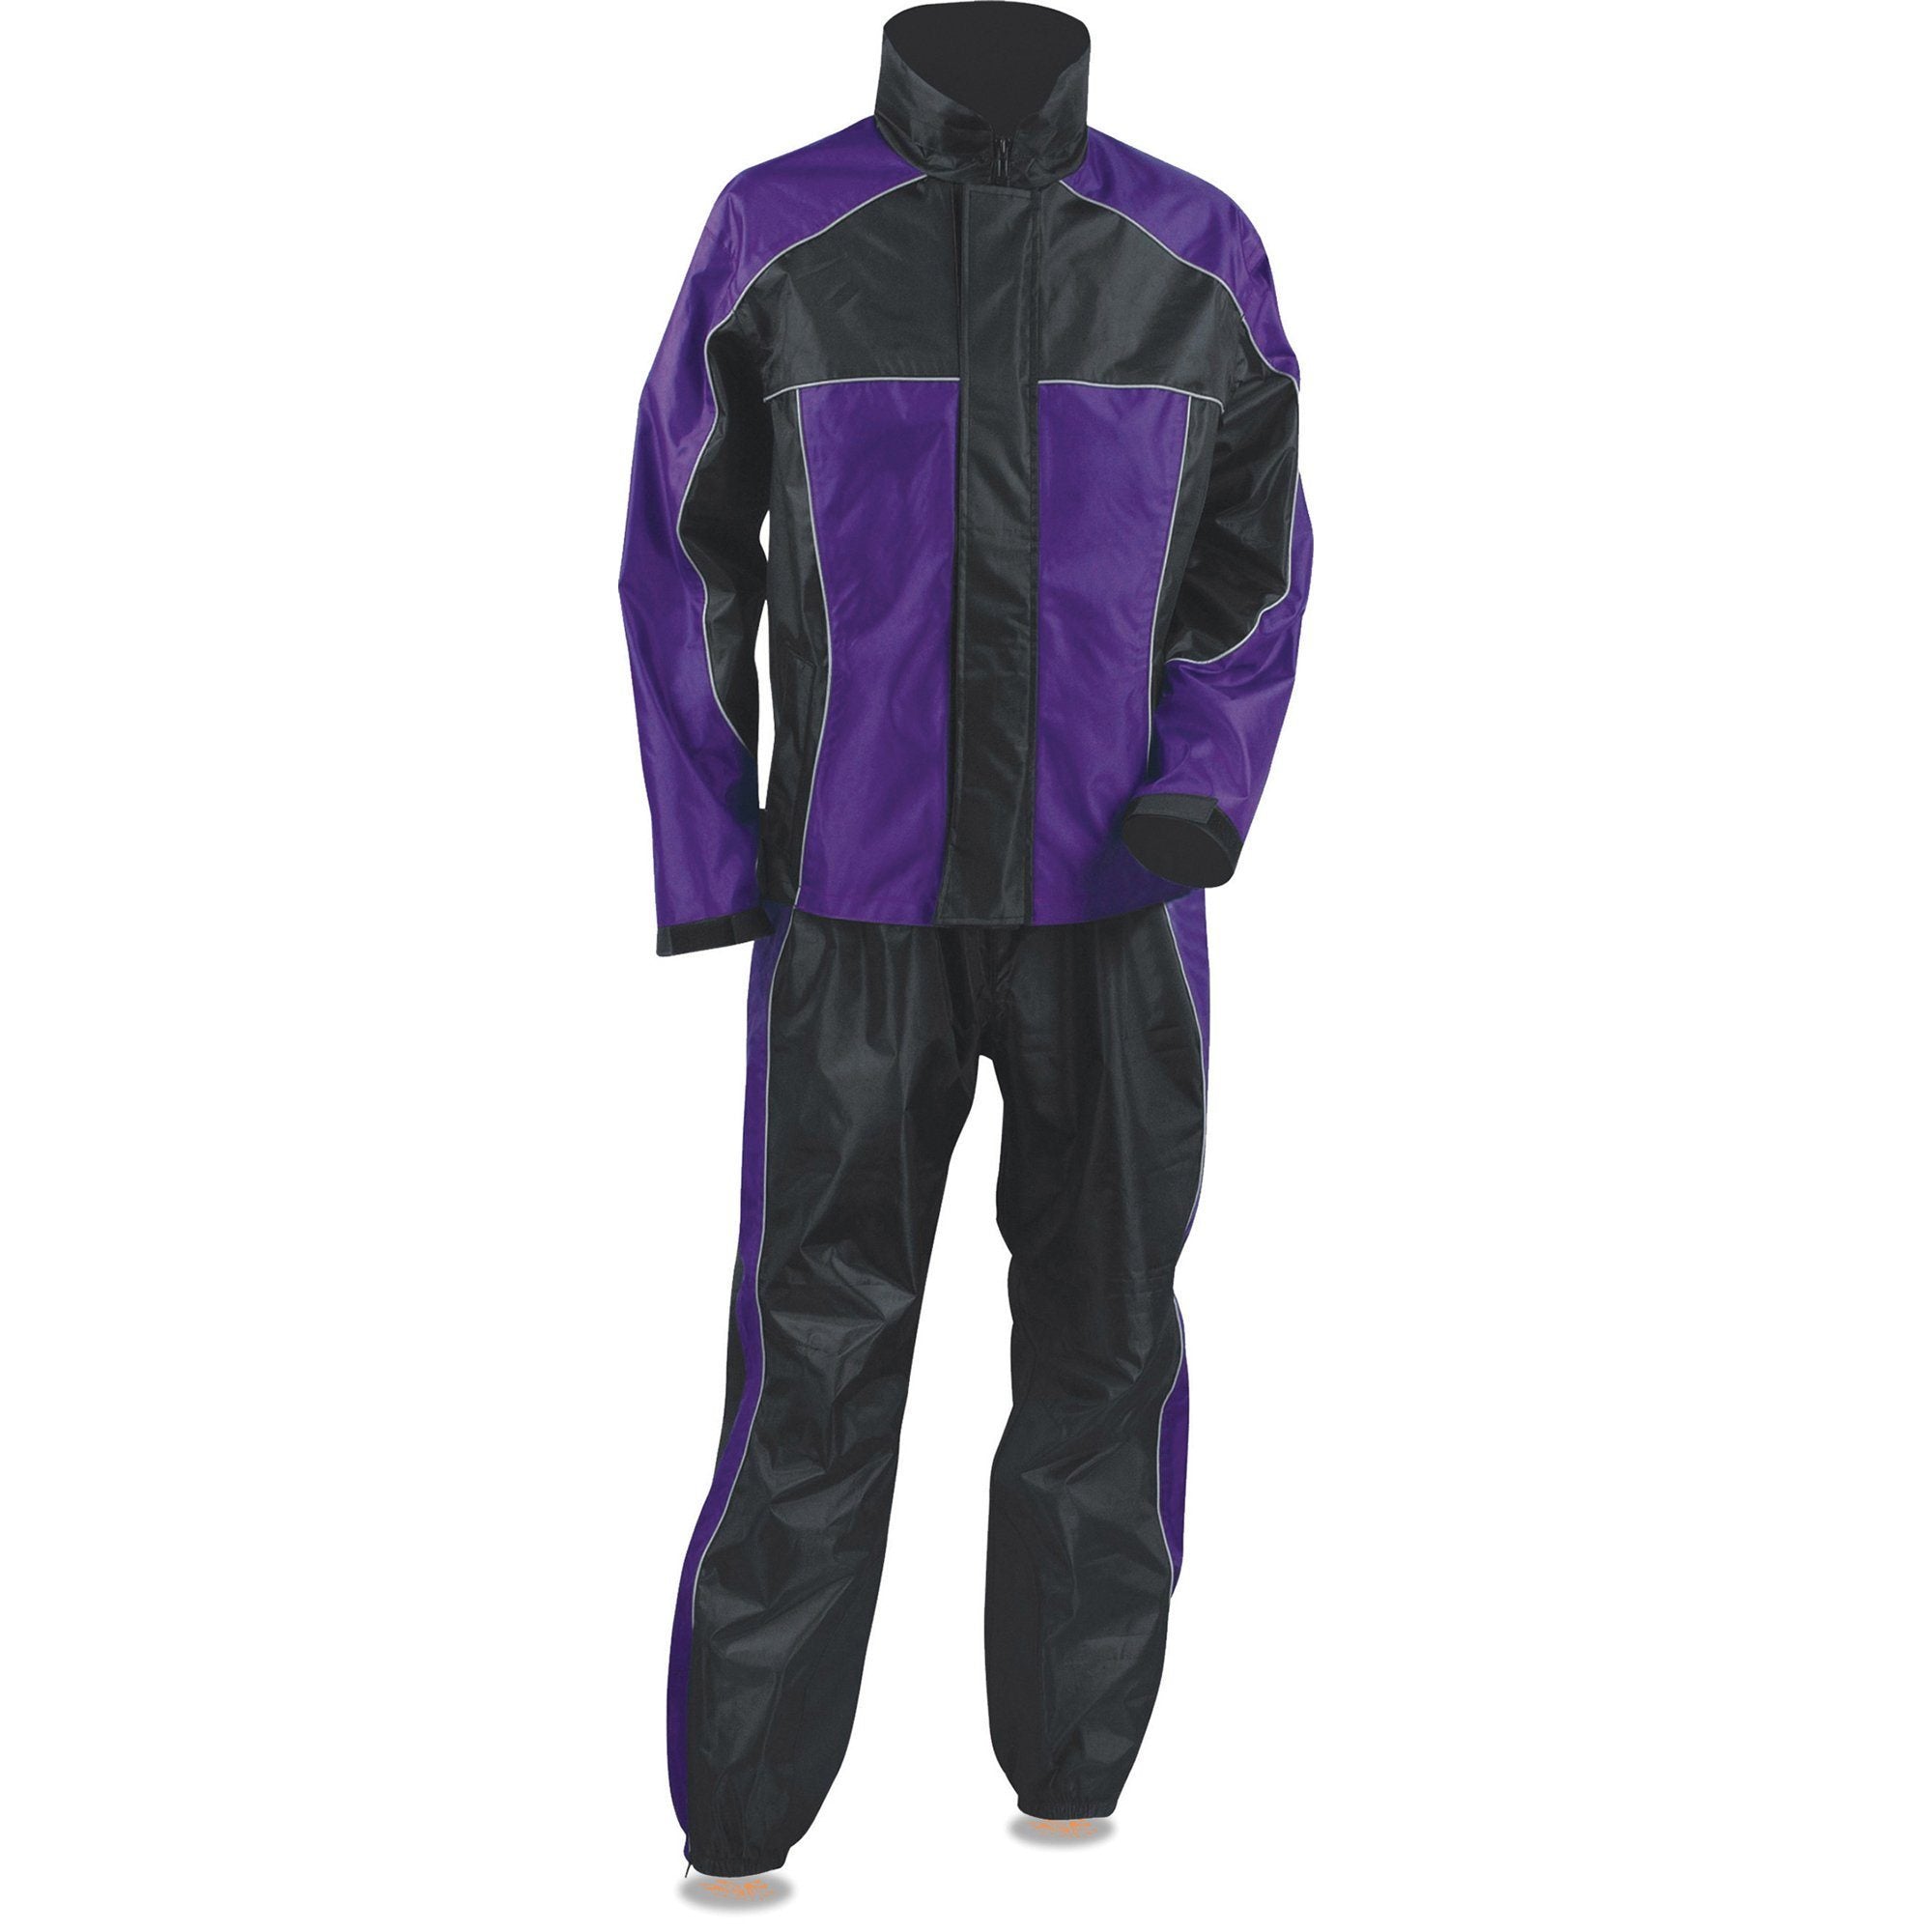 NexGen SH2222 Women's Purple and Black Oxford Water Proof Motorcycle Rain Suit